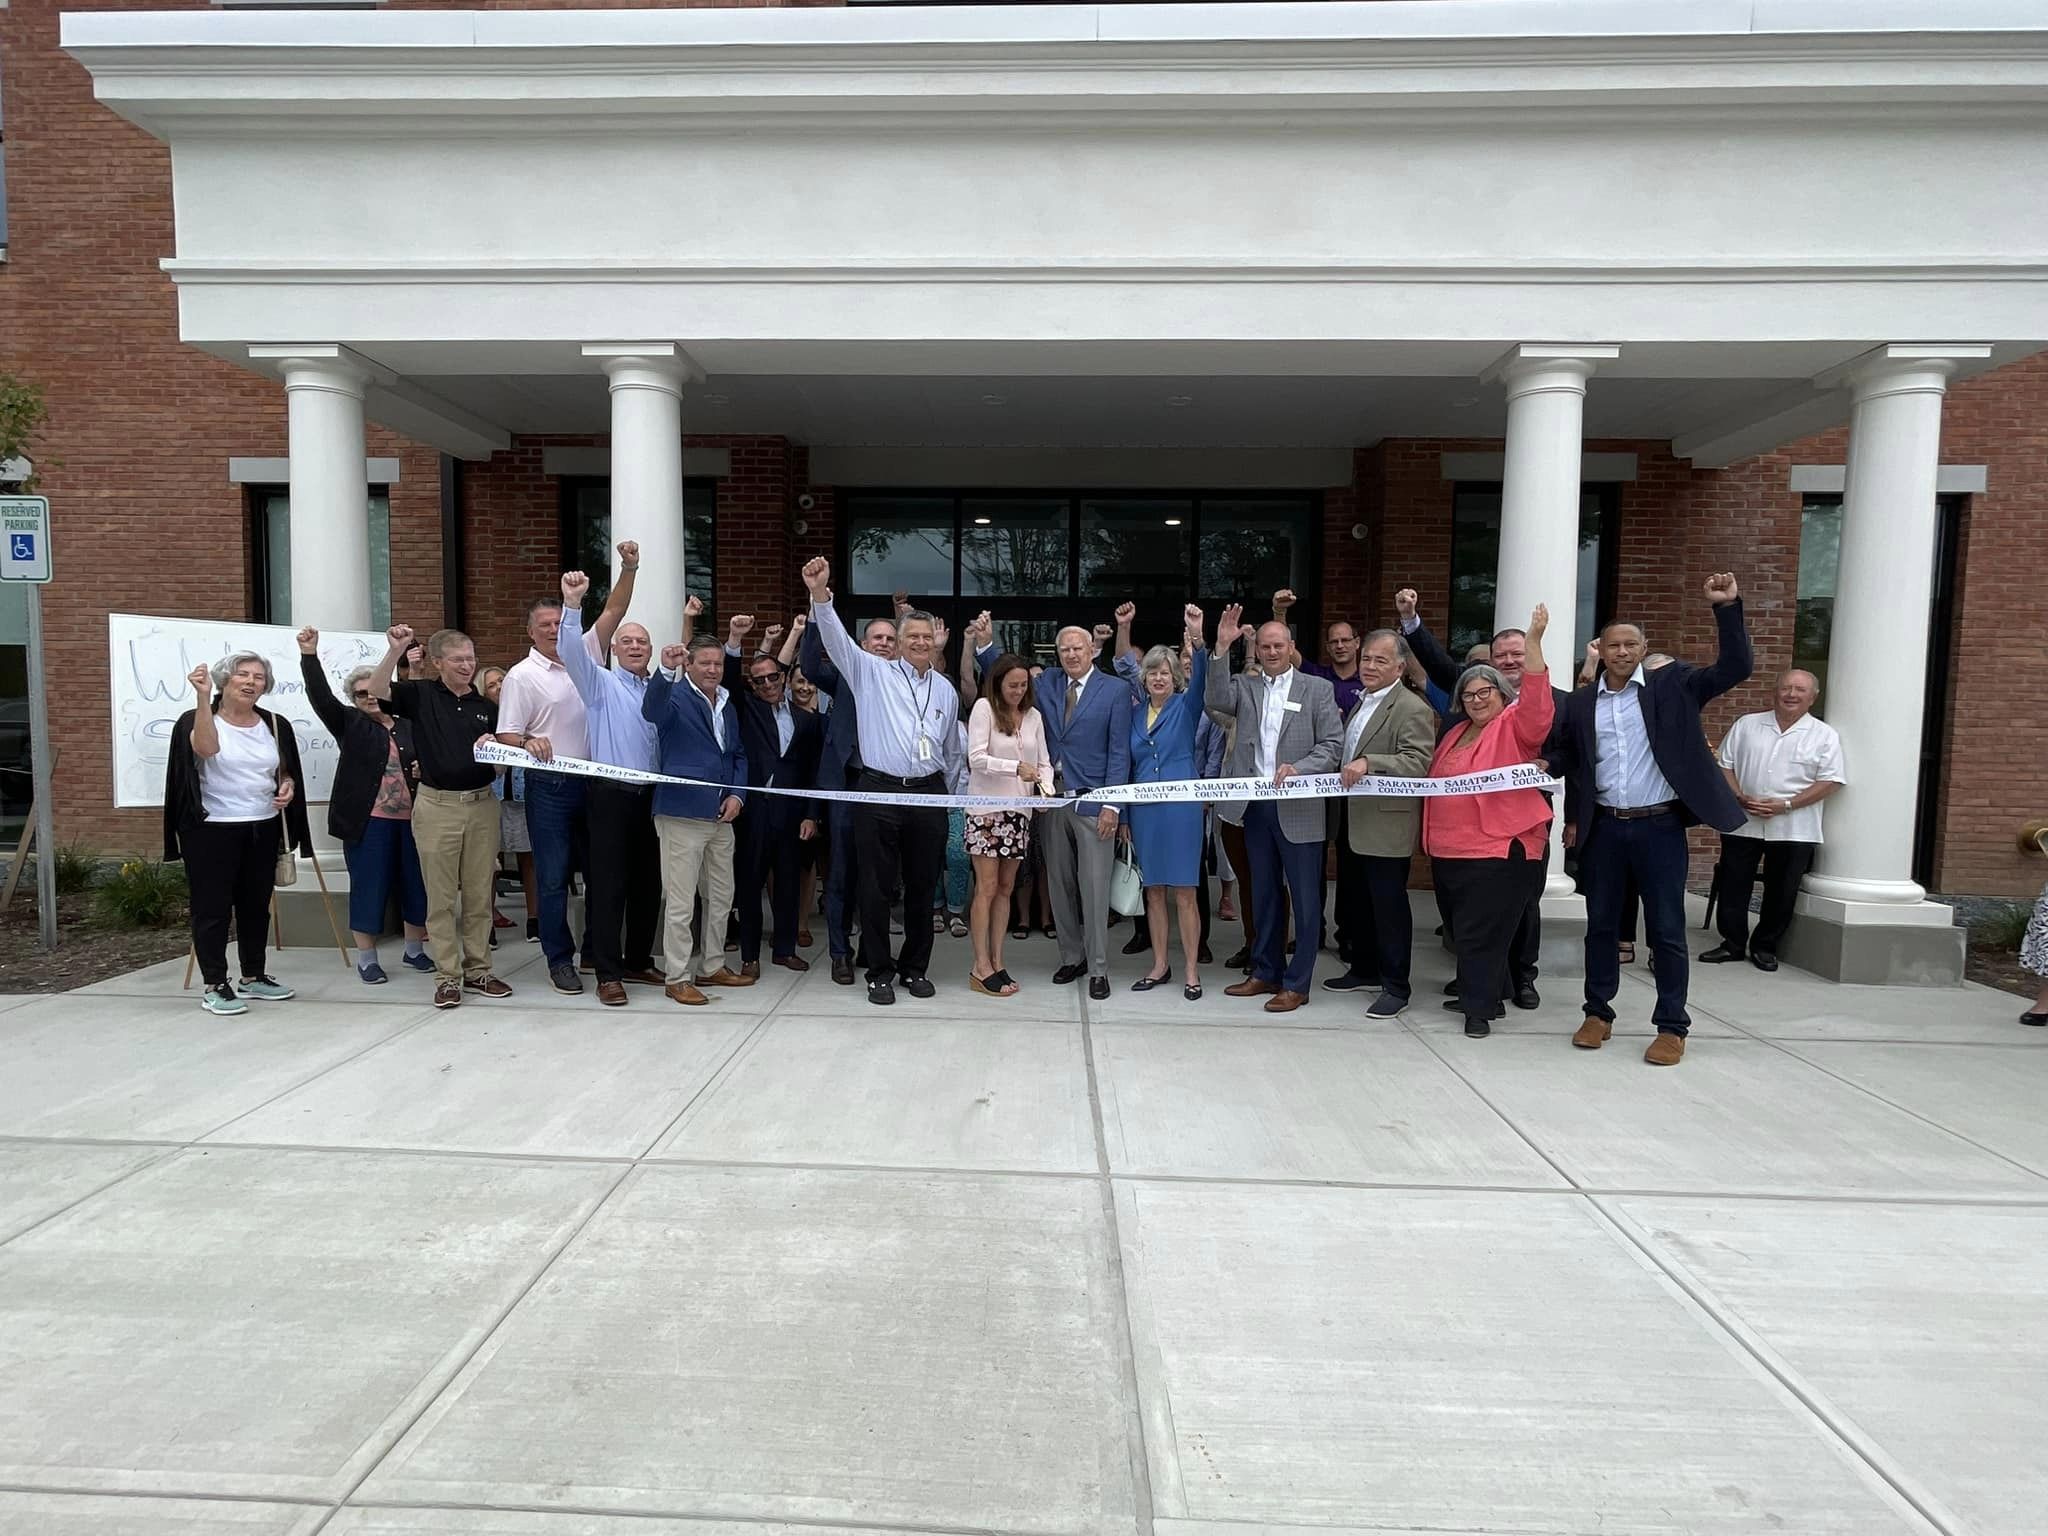 Image for Saratoga Senior Center celebrates new home with ribbon cutting